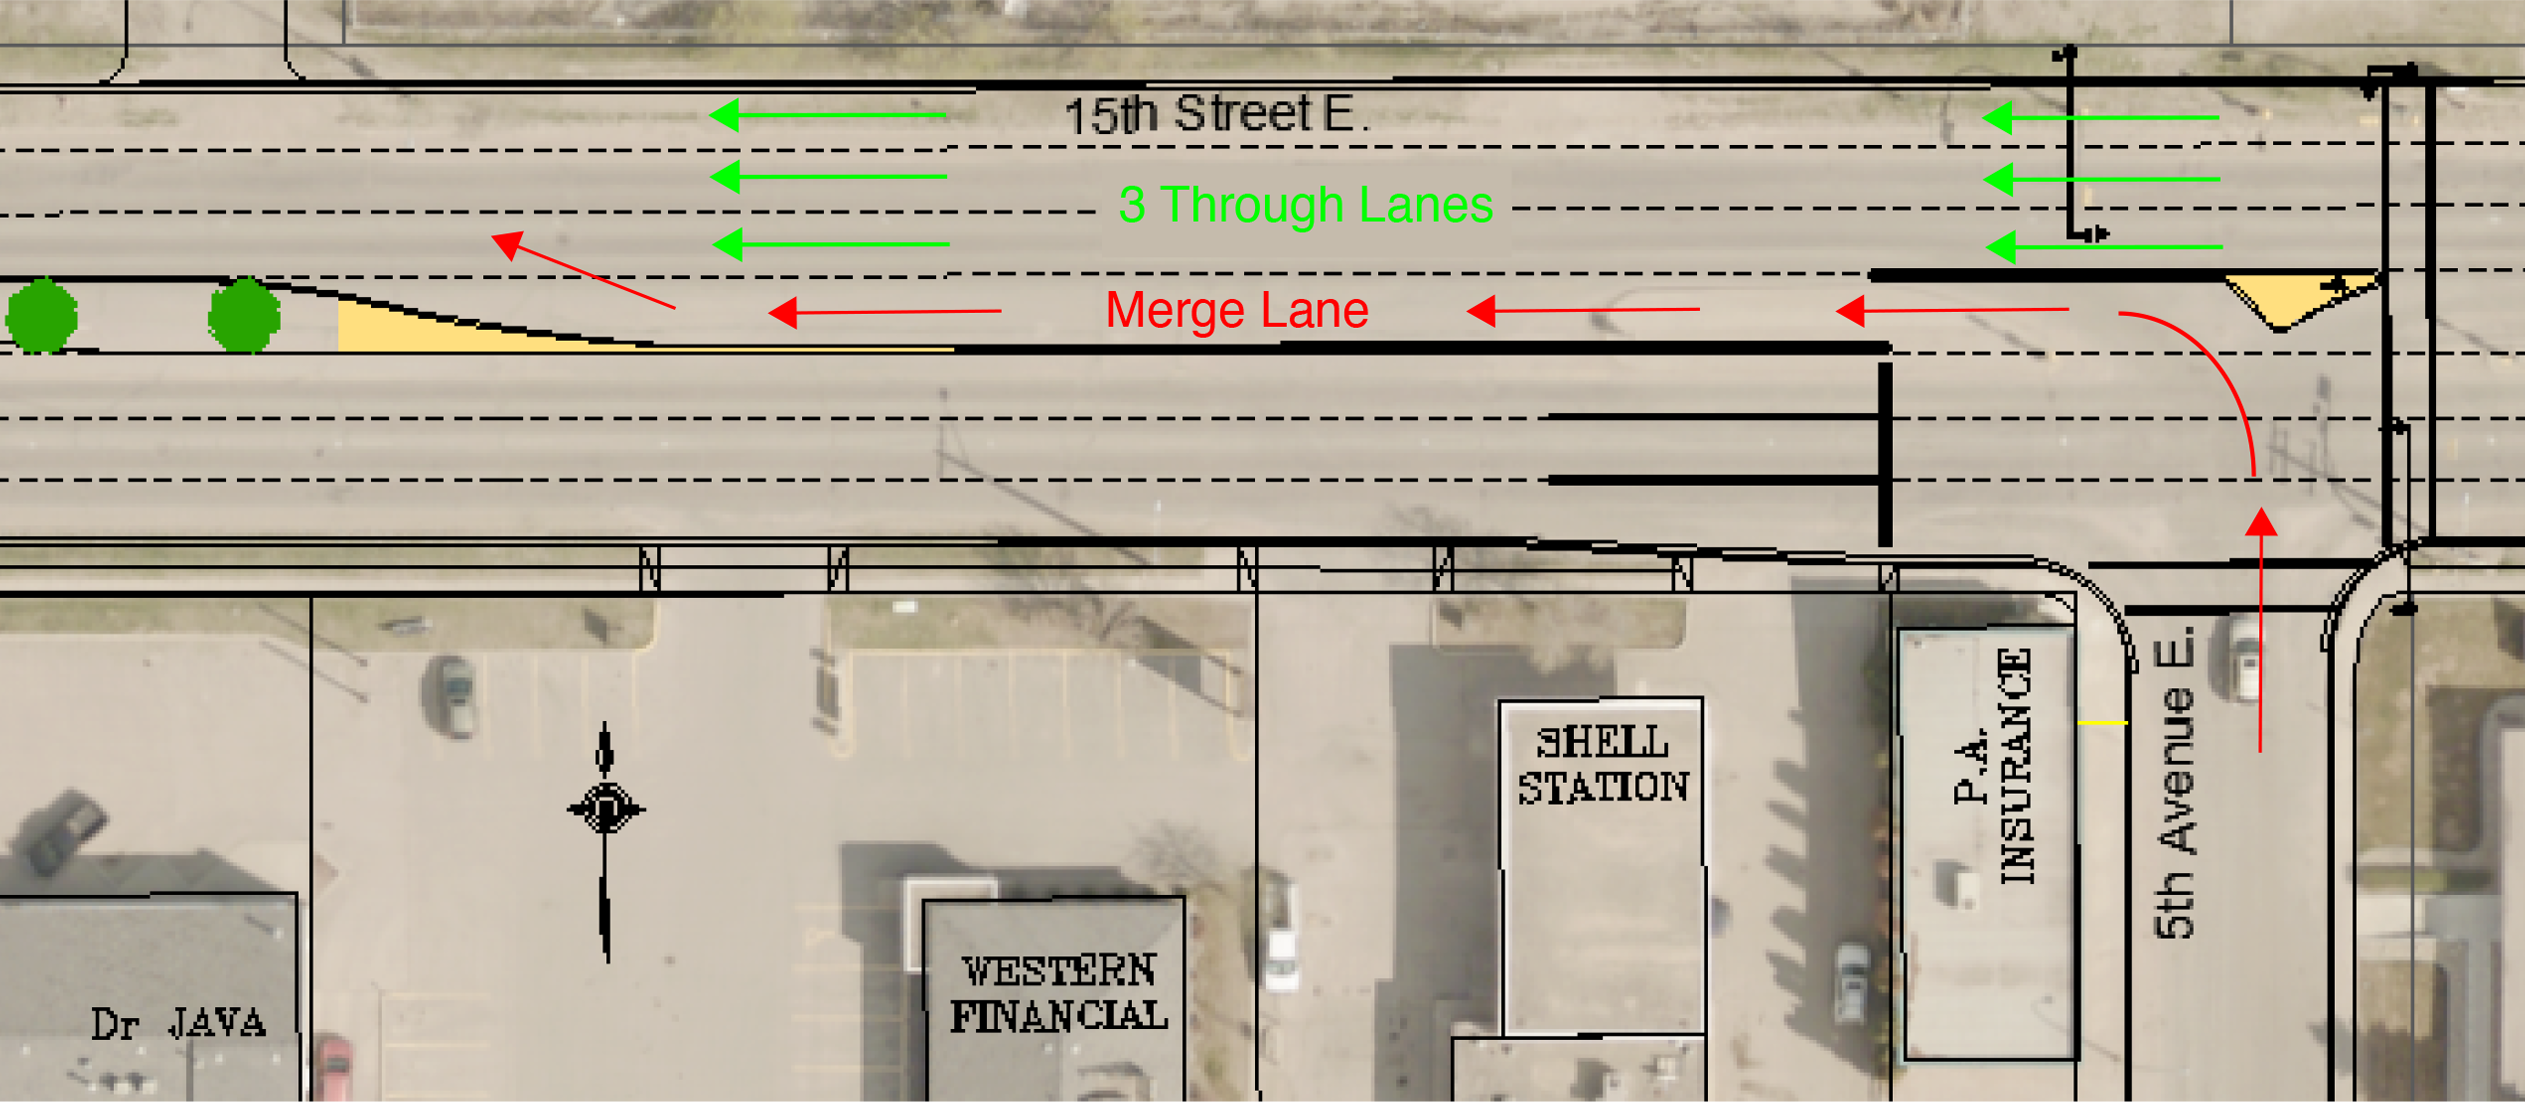 Slip lane Graphic